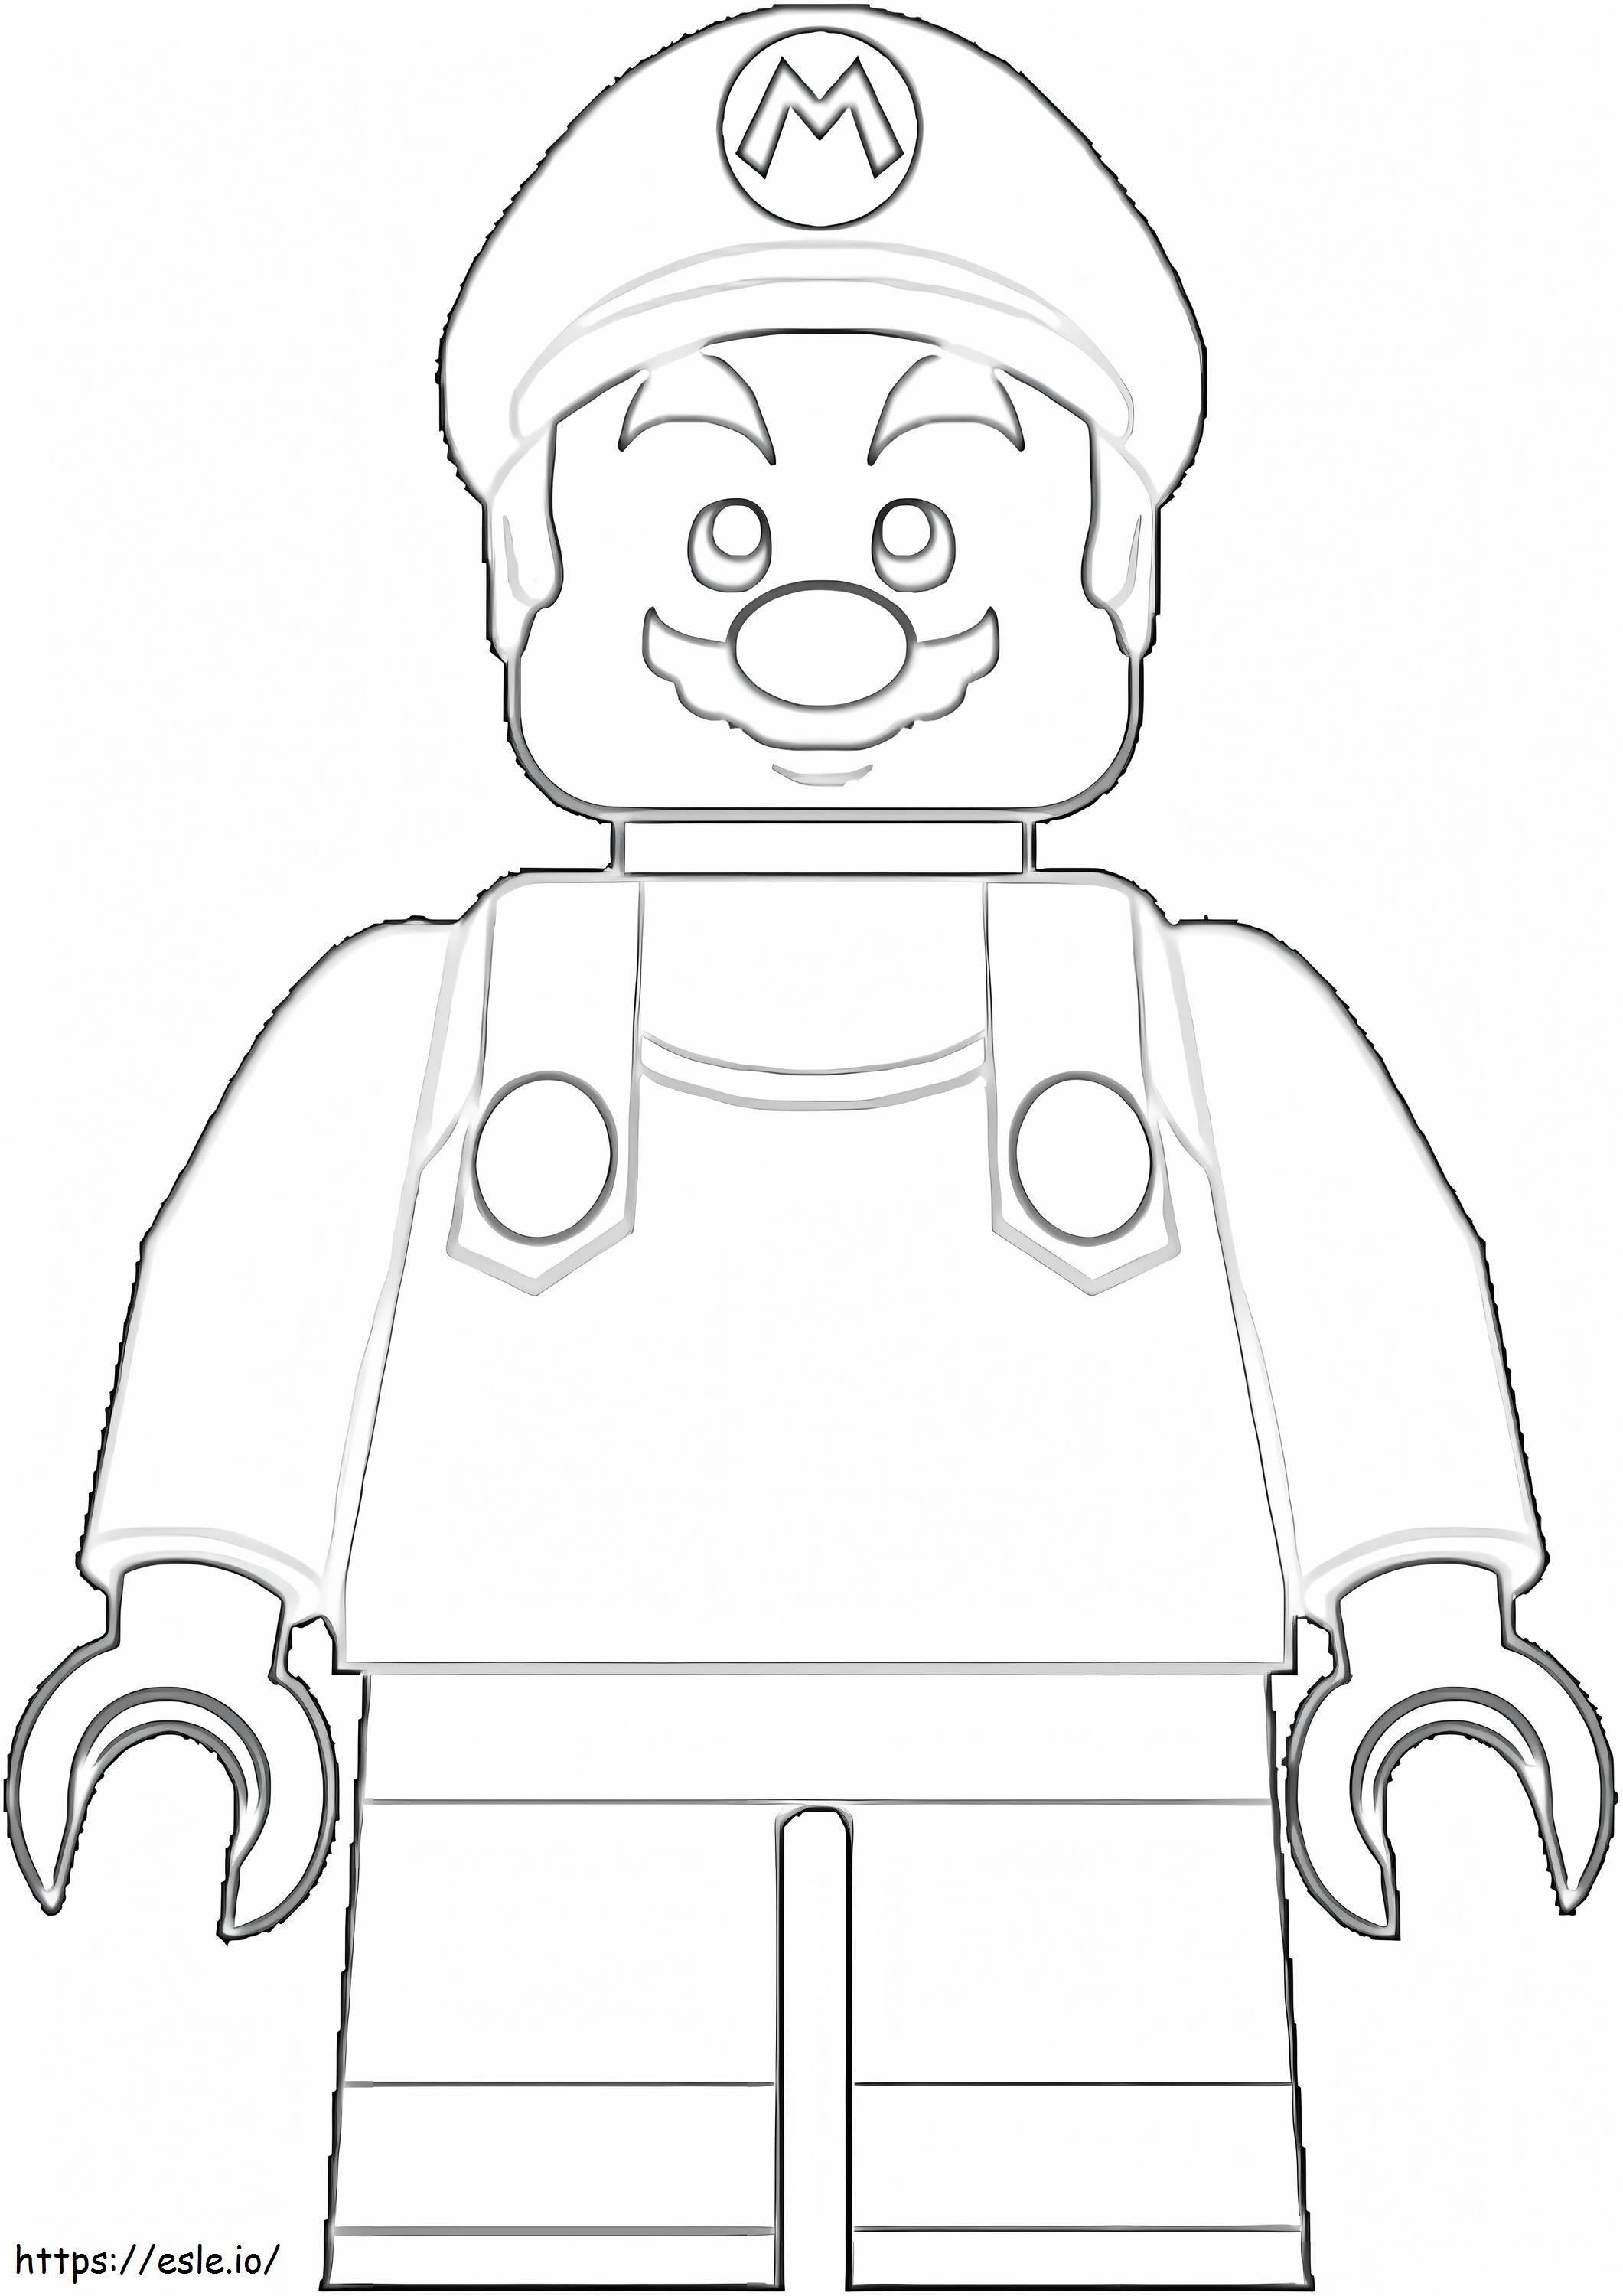 Coloriage Lego Super Mario 3 à imprimer dessin